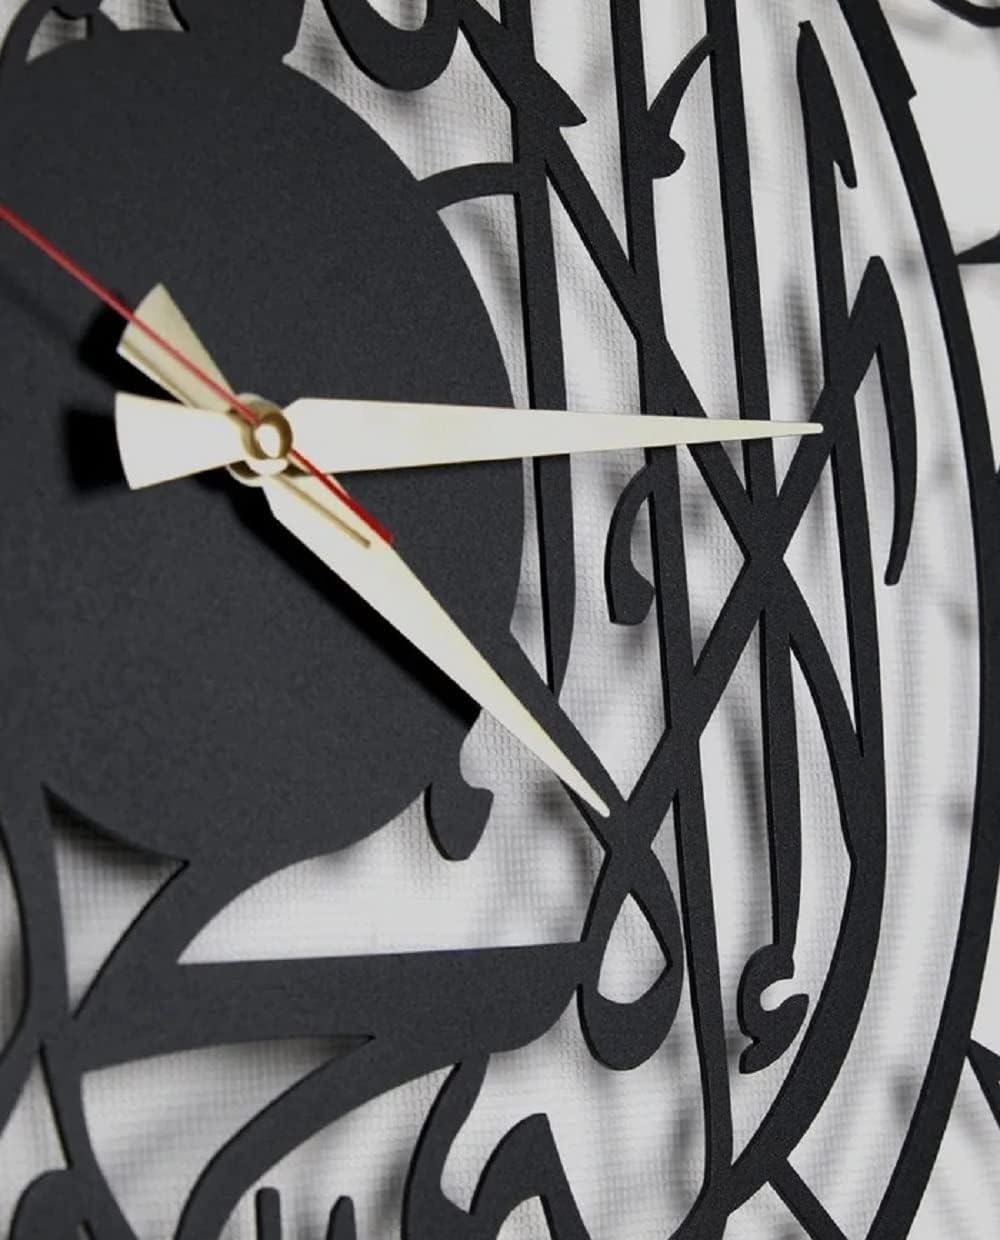 kalima Metal Wall Clock for livingroom | Kalima Shahada Metal Wall Clock(40 cm x 40 cm)